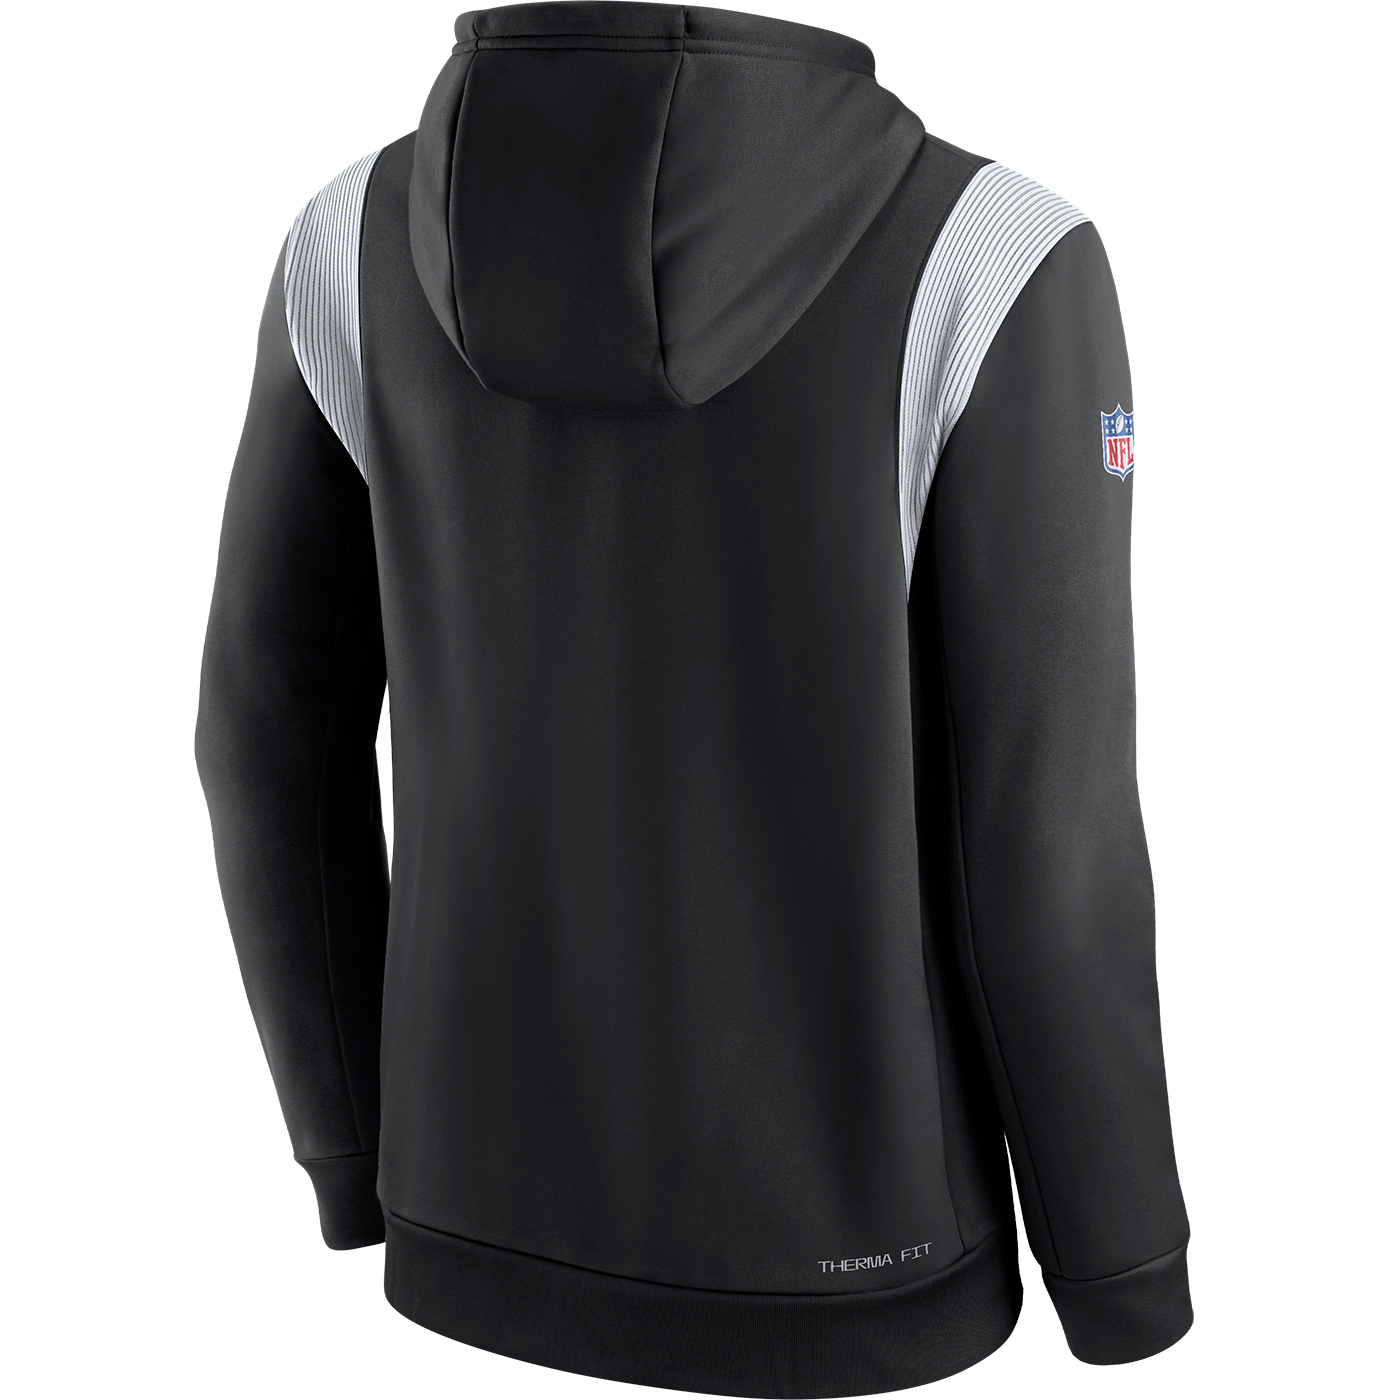 Nike Women's Dri-FIT Sideline (NFL Las Vegas Raiders) Long-Sleeve Hooded Top in Grey, Size: Small | 00MX07R8D-3S0